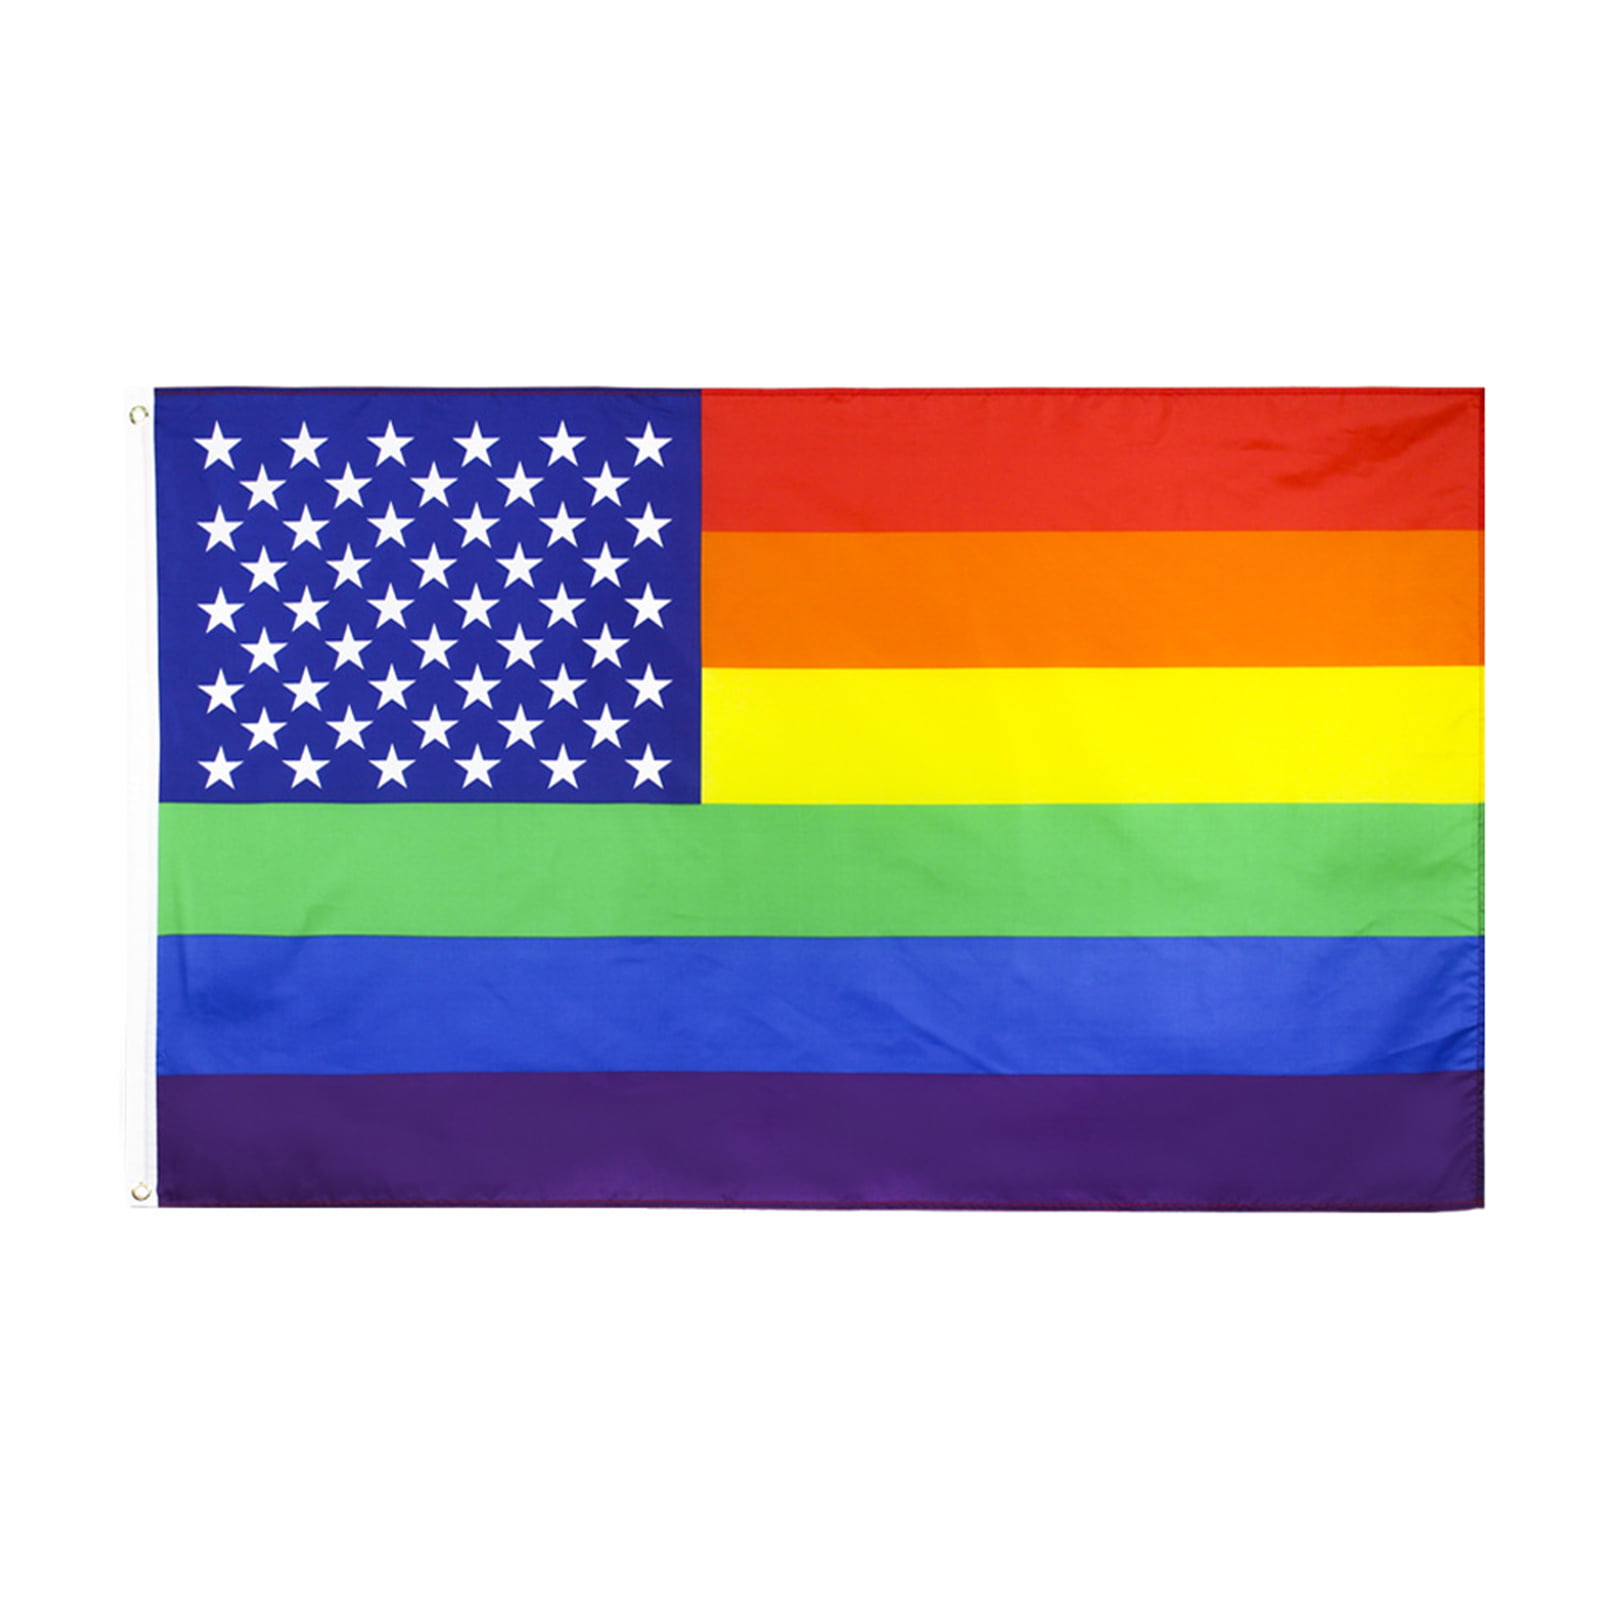 Rainbow Love Is Love Premium Quality 100D Woven Poly Nylon 3'x5' Flag Banner 